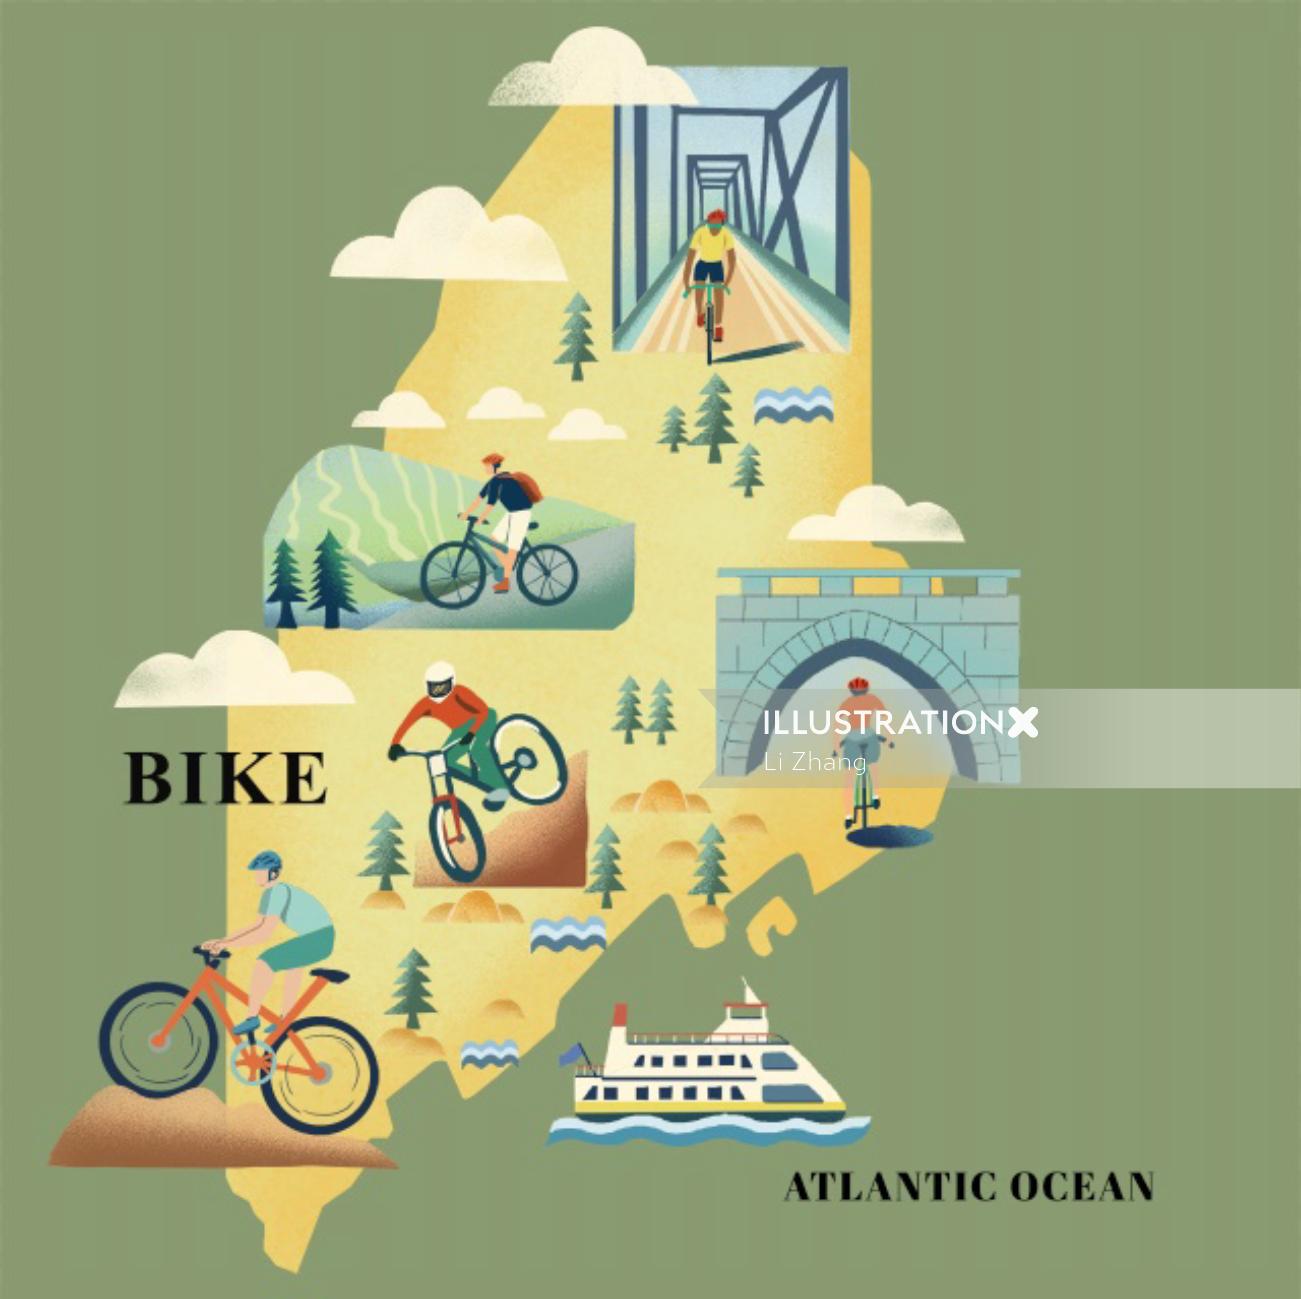 Outside Magazine's Maine bike paths map illustration